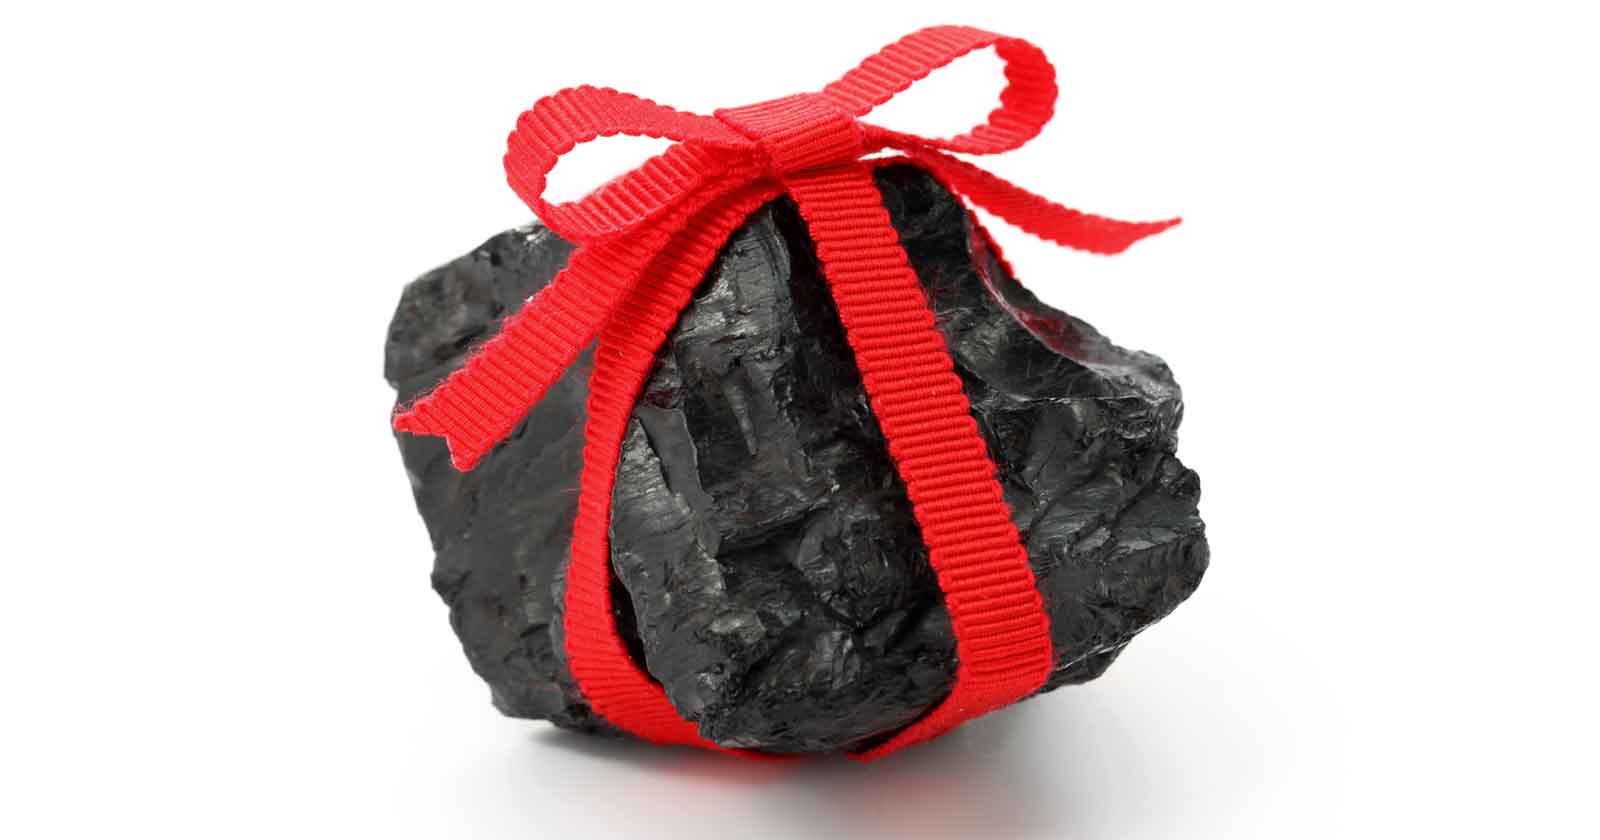 Main Article Image - Coal Christmas Wrapped